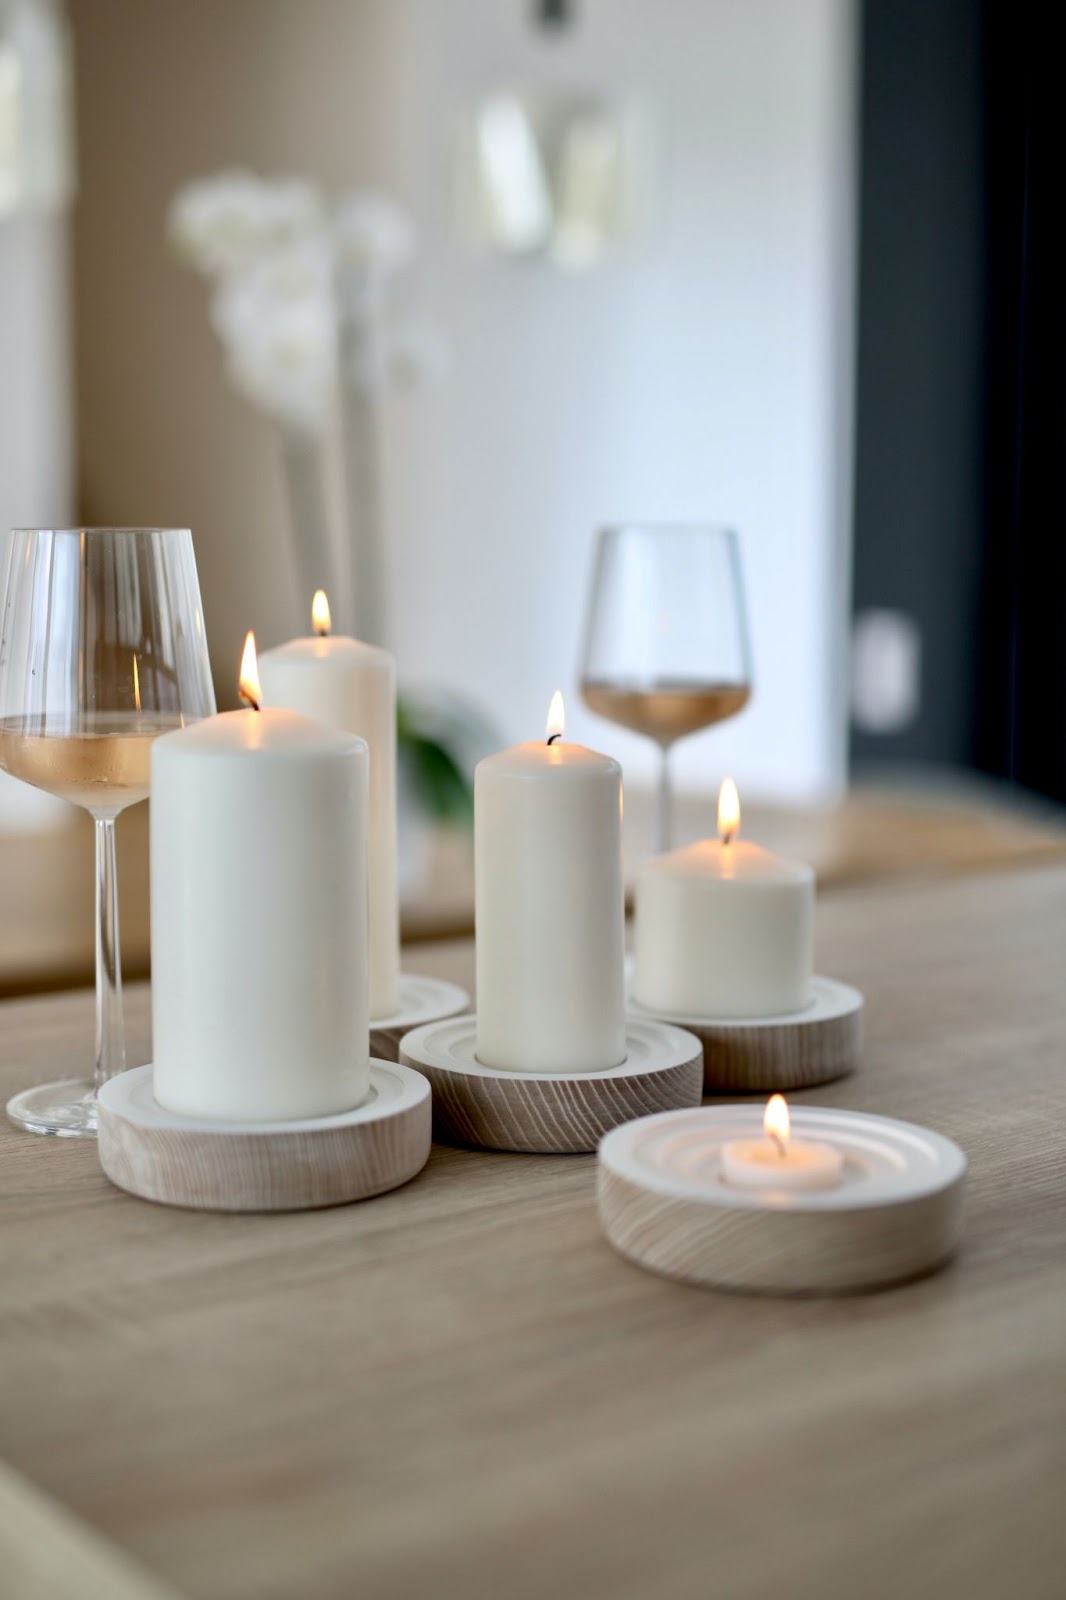 Candles on a table for decor - DIY Farmhouse Kitchen Decor And Design Ideas 